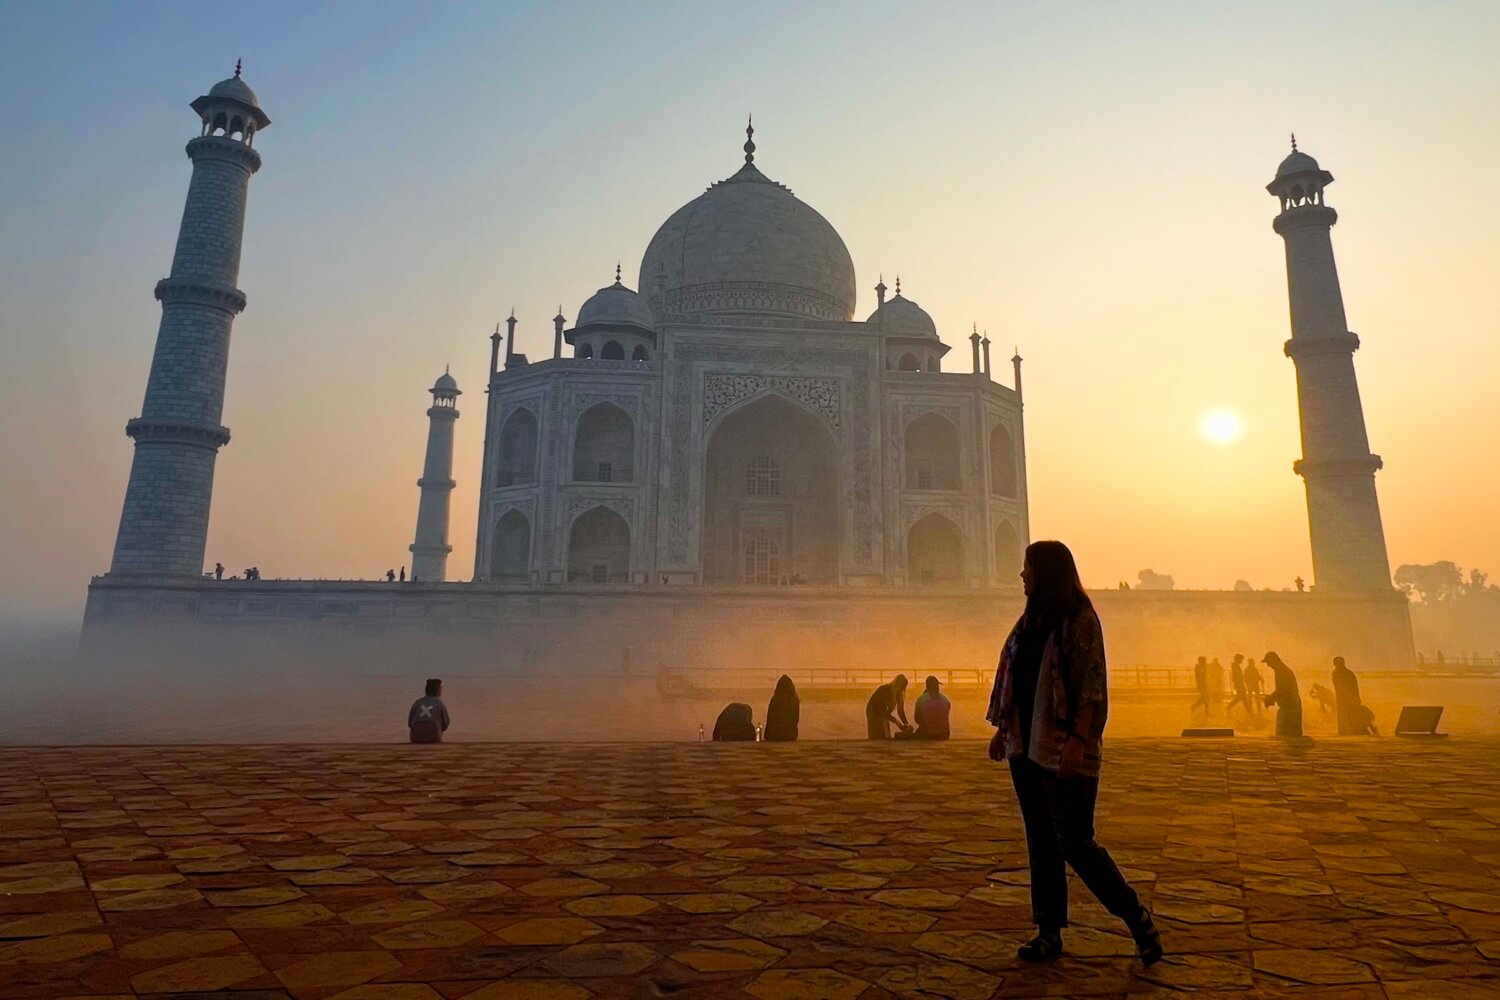 Jade walks by as the sun rises over the Taj Mahal in Agra, India